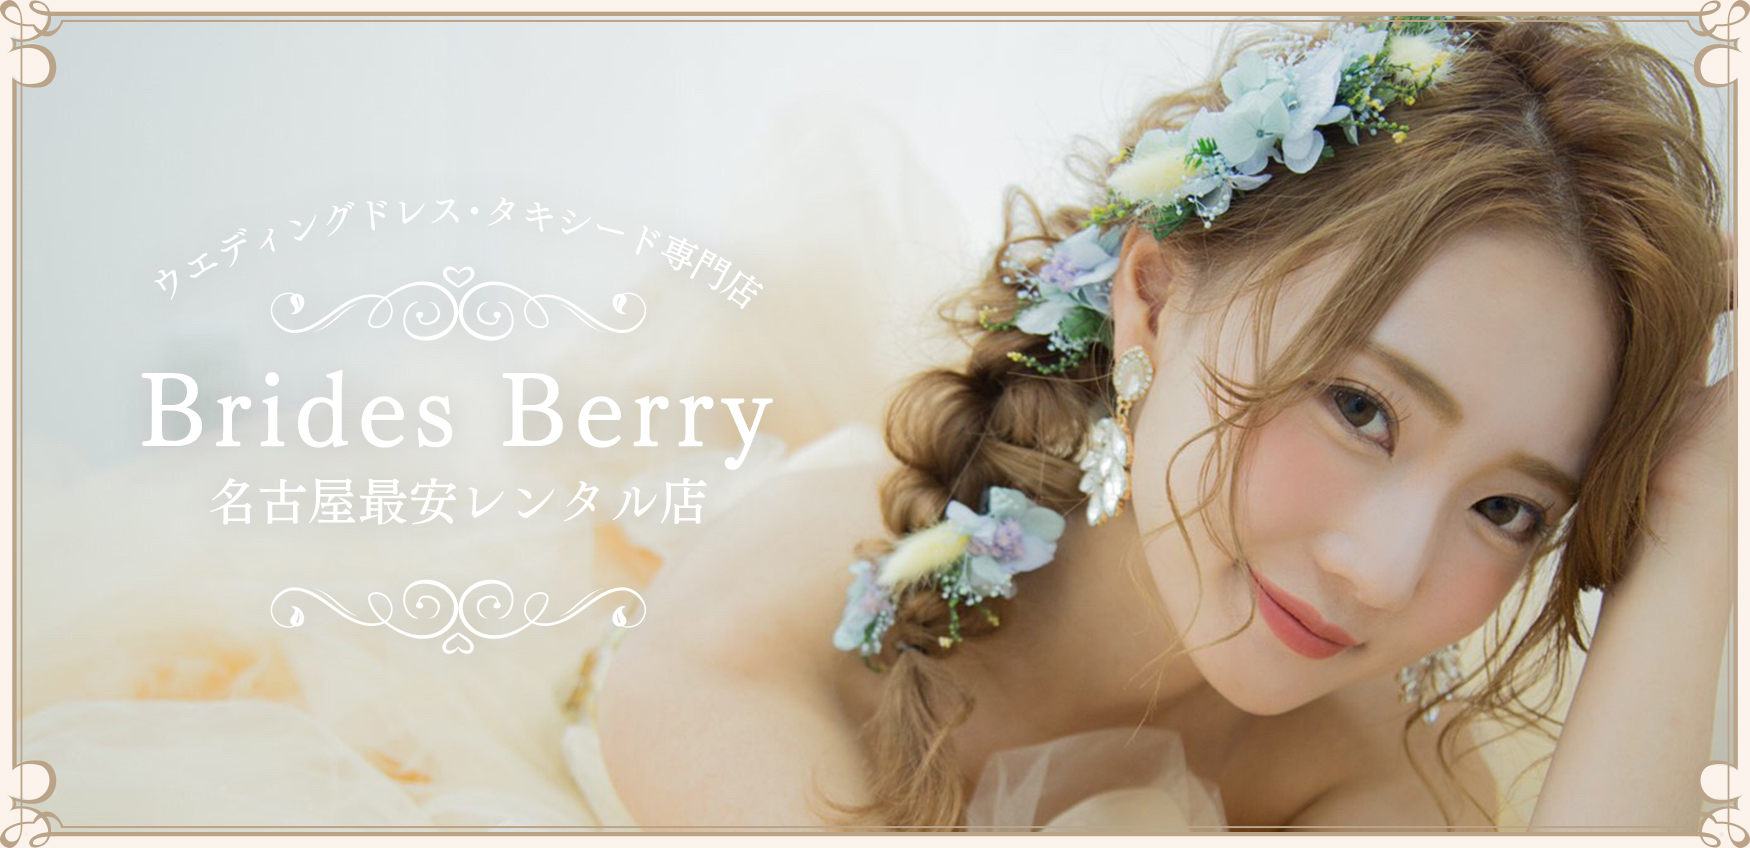 Brides Berry